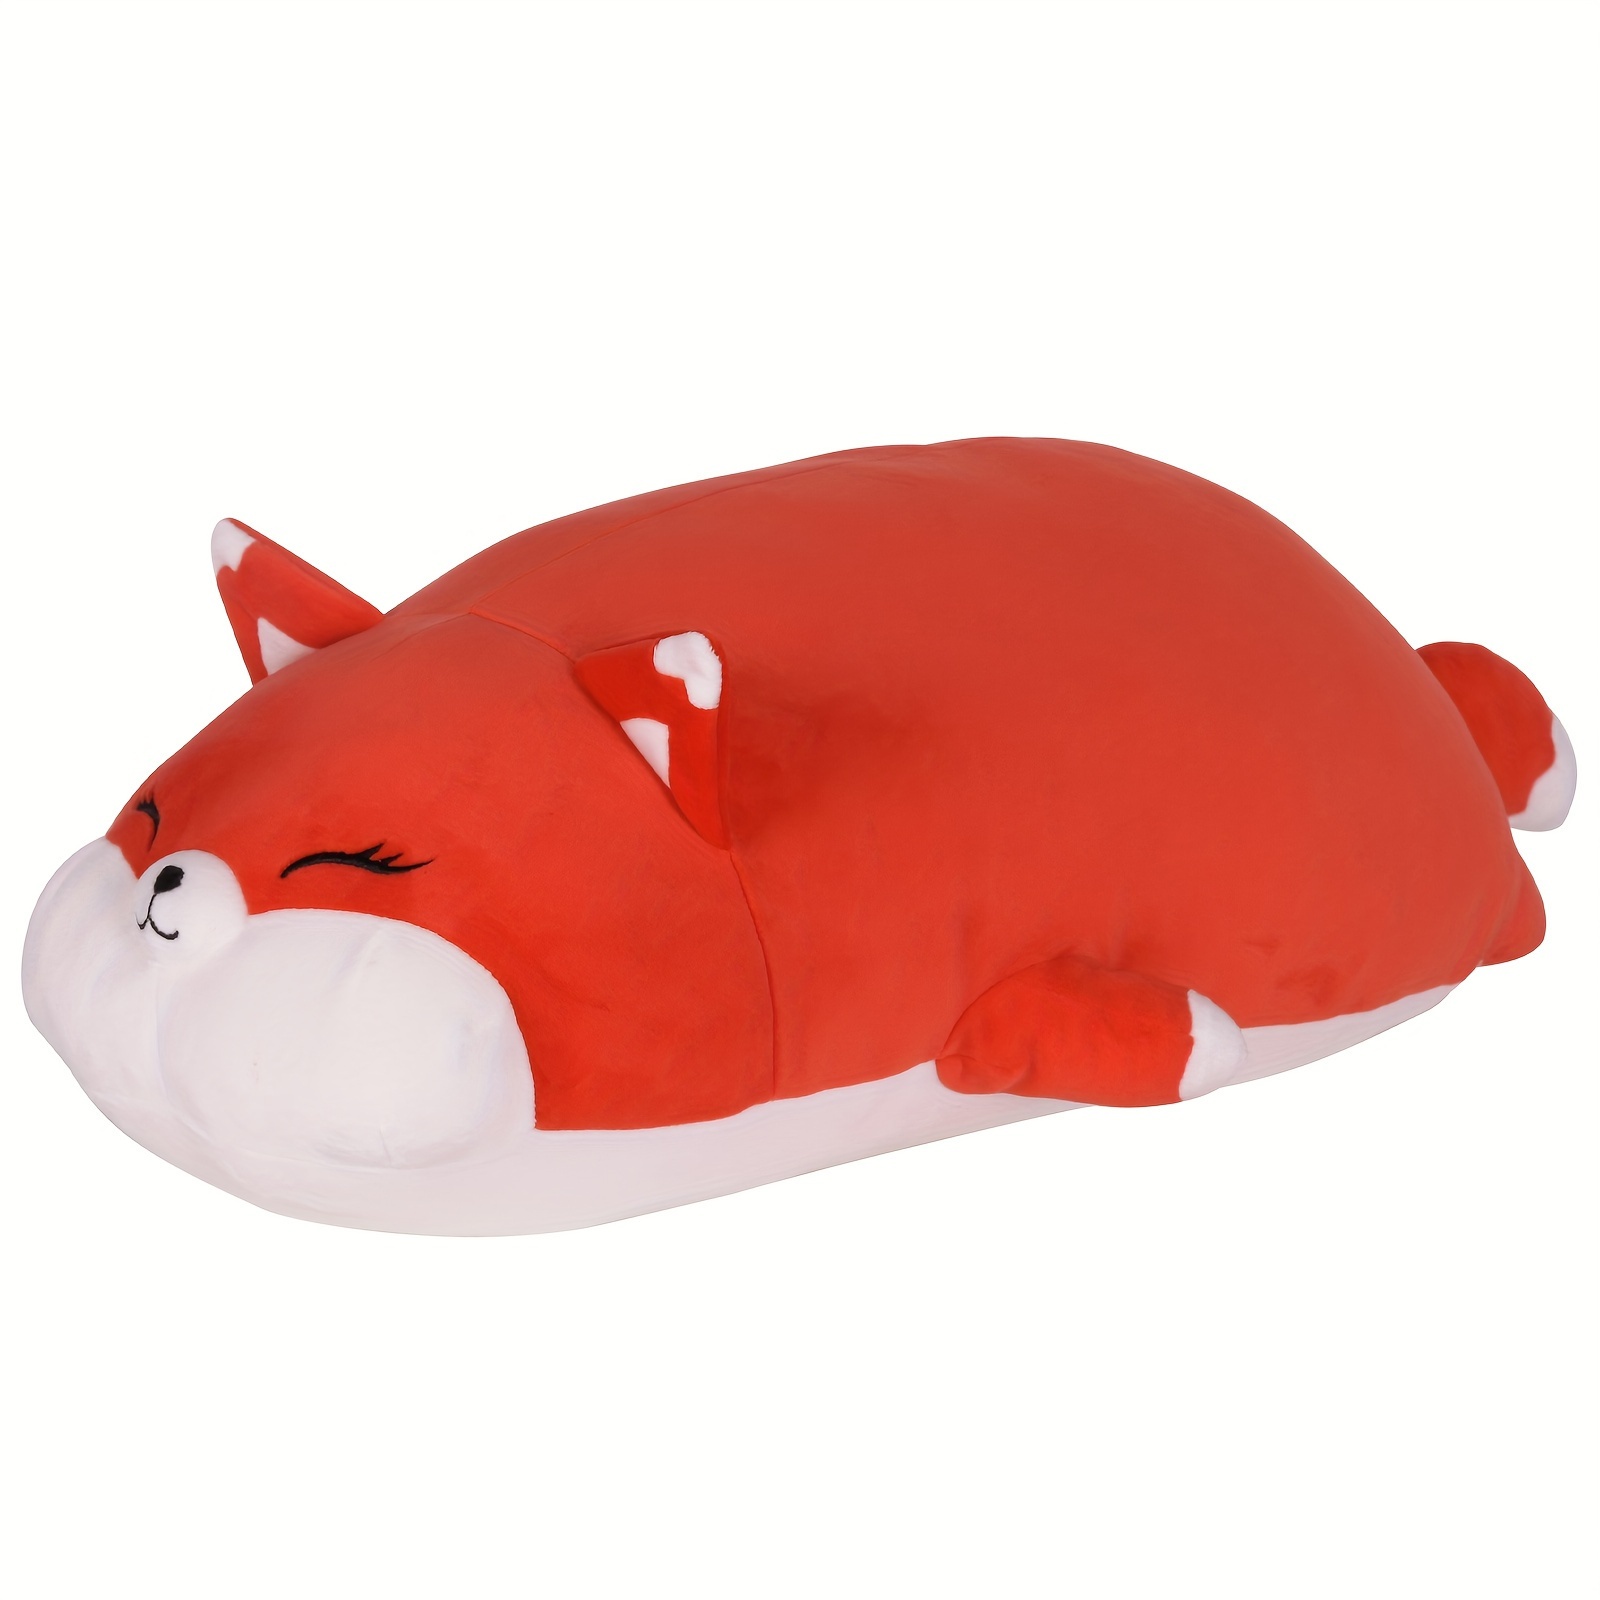 

22inch/55cm Fox Stuffed Animal Plush Large Cute Soft Body Pillow Big Foxy Plush Toy For Girls, Gifts For Kids Girls Boys Valentines Birthday